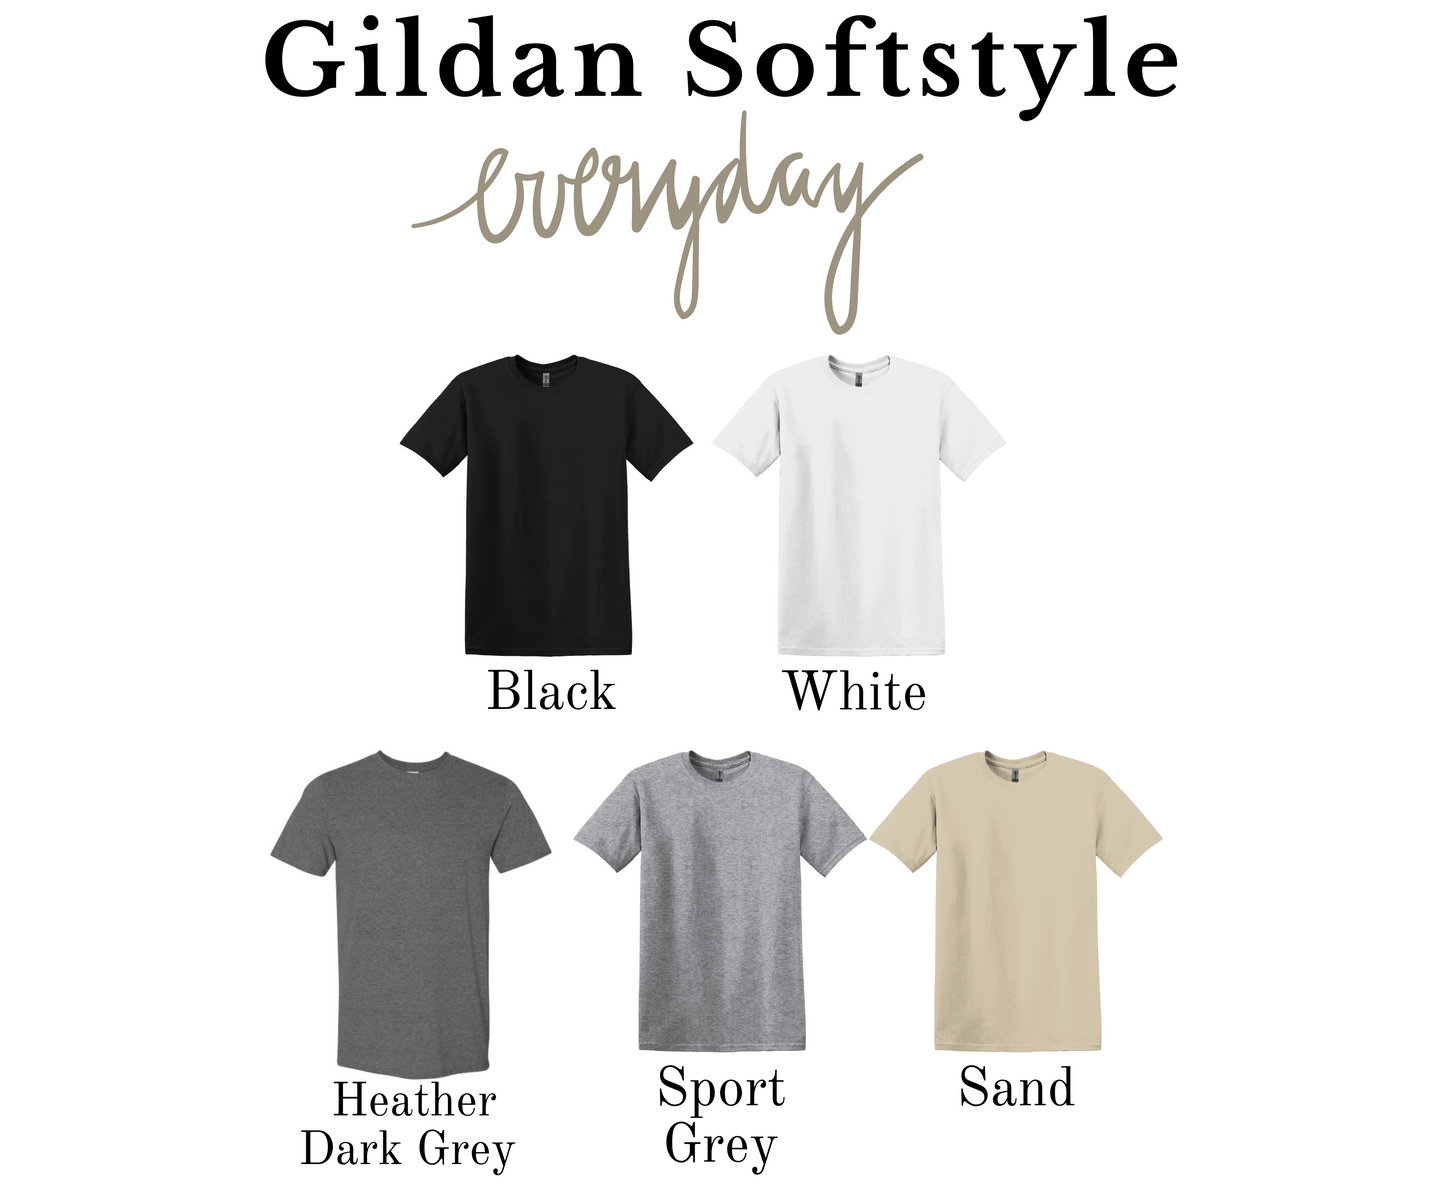 Halloween BOO Sequin Embroidery Effect Gildan Softstyle T-shirt or Sweatshirt